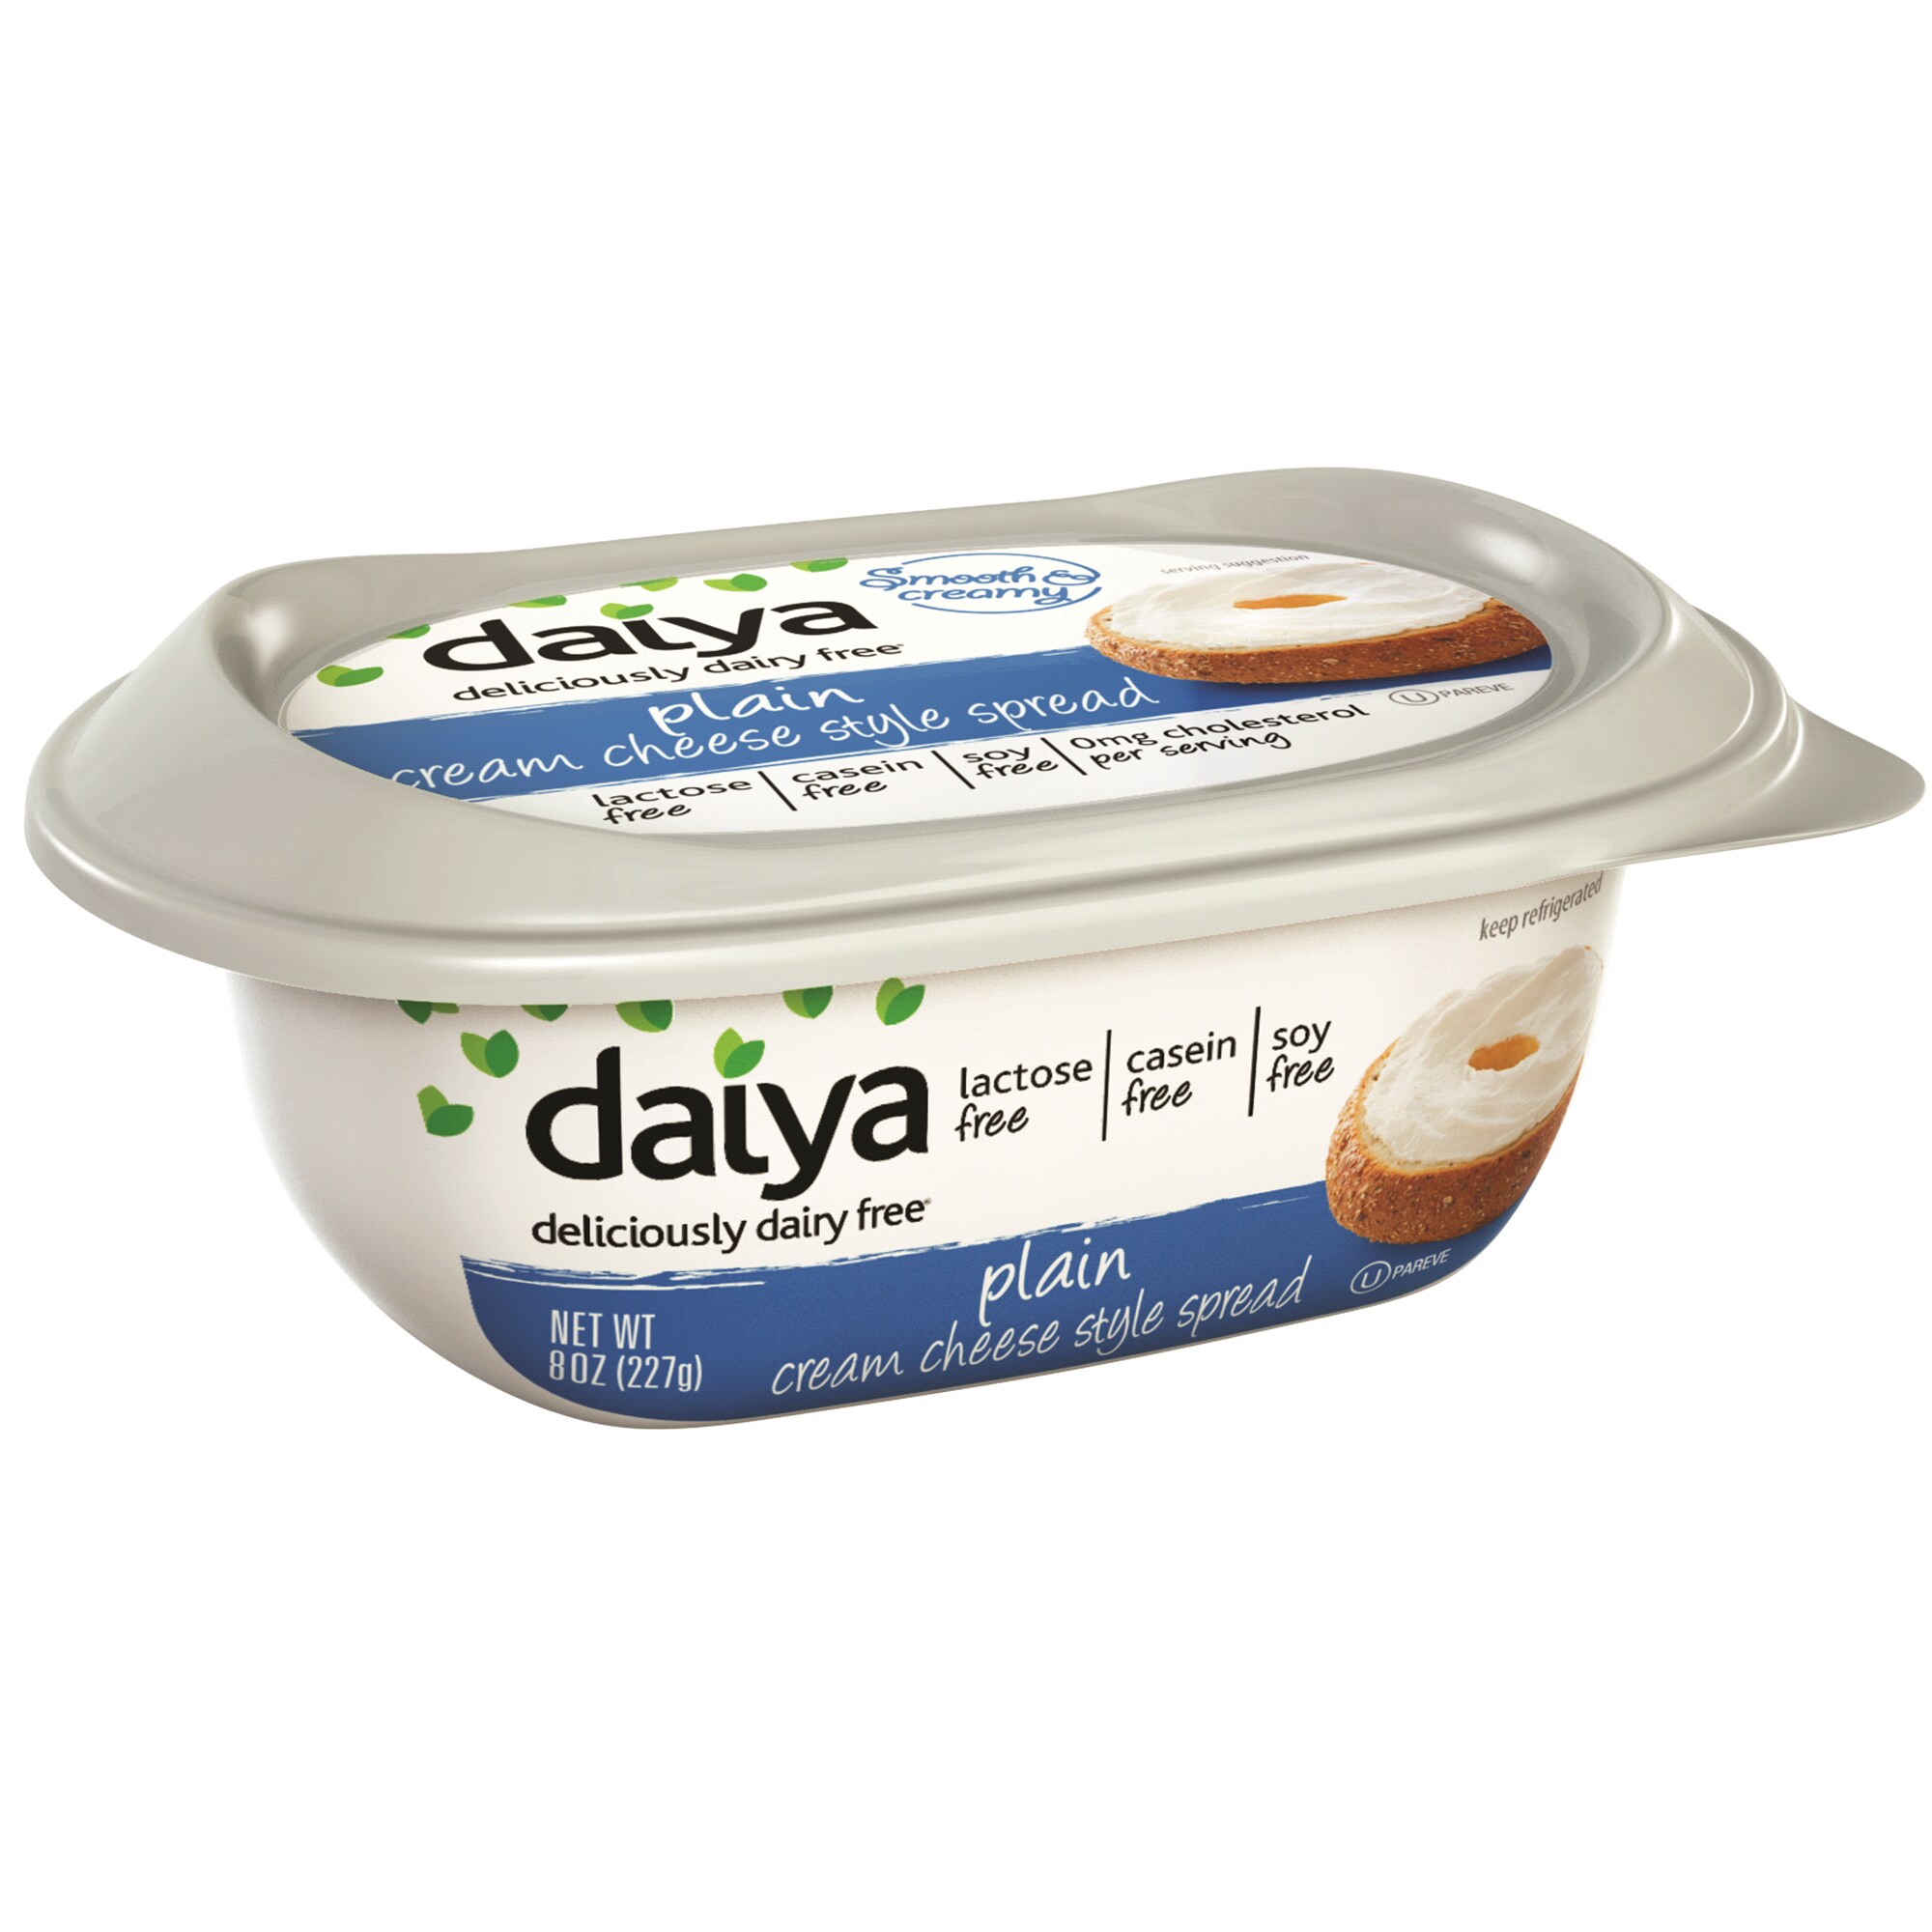 Image result for daiya yogurt